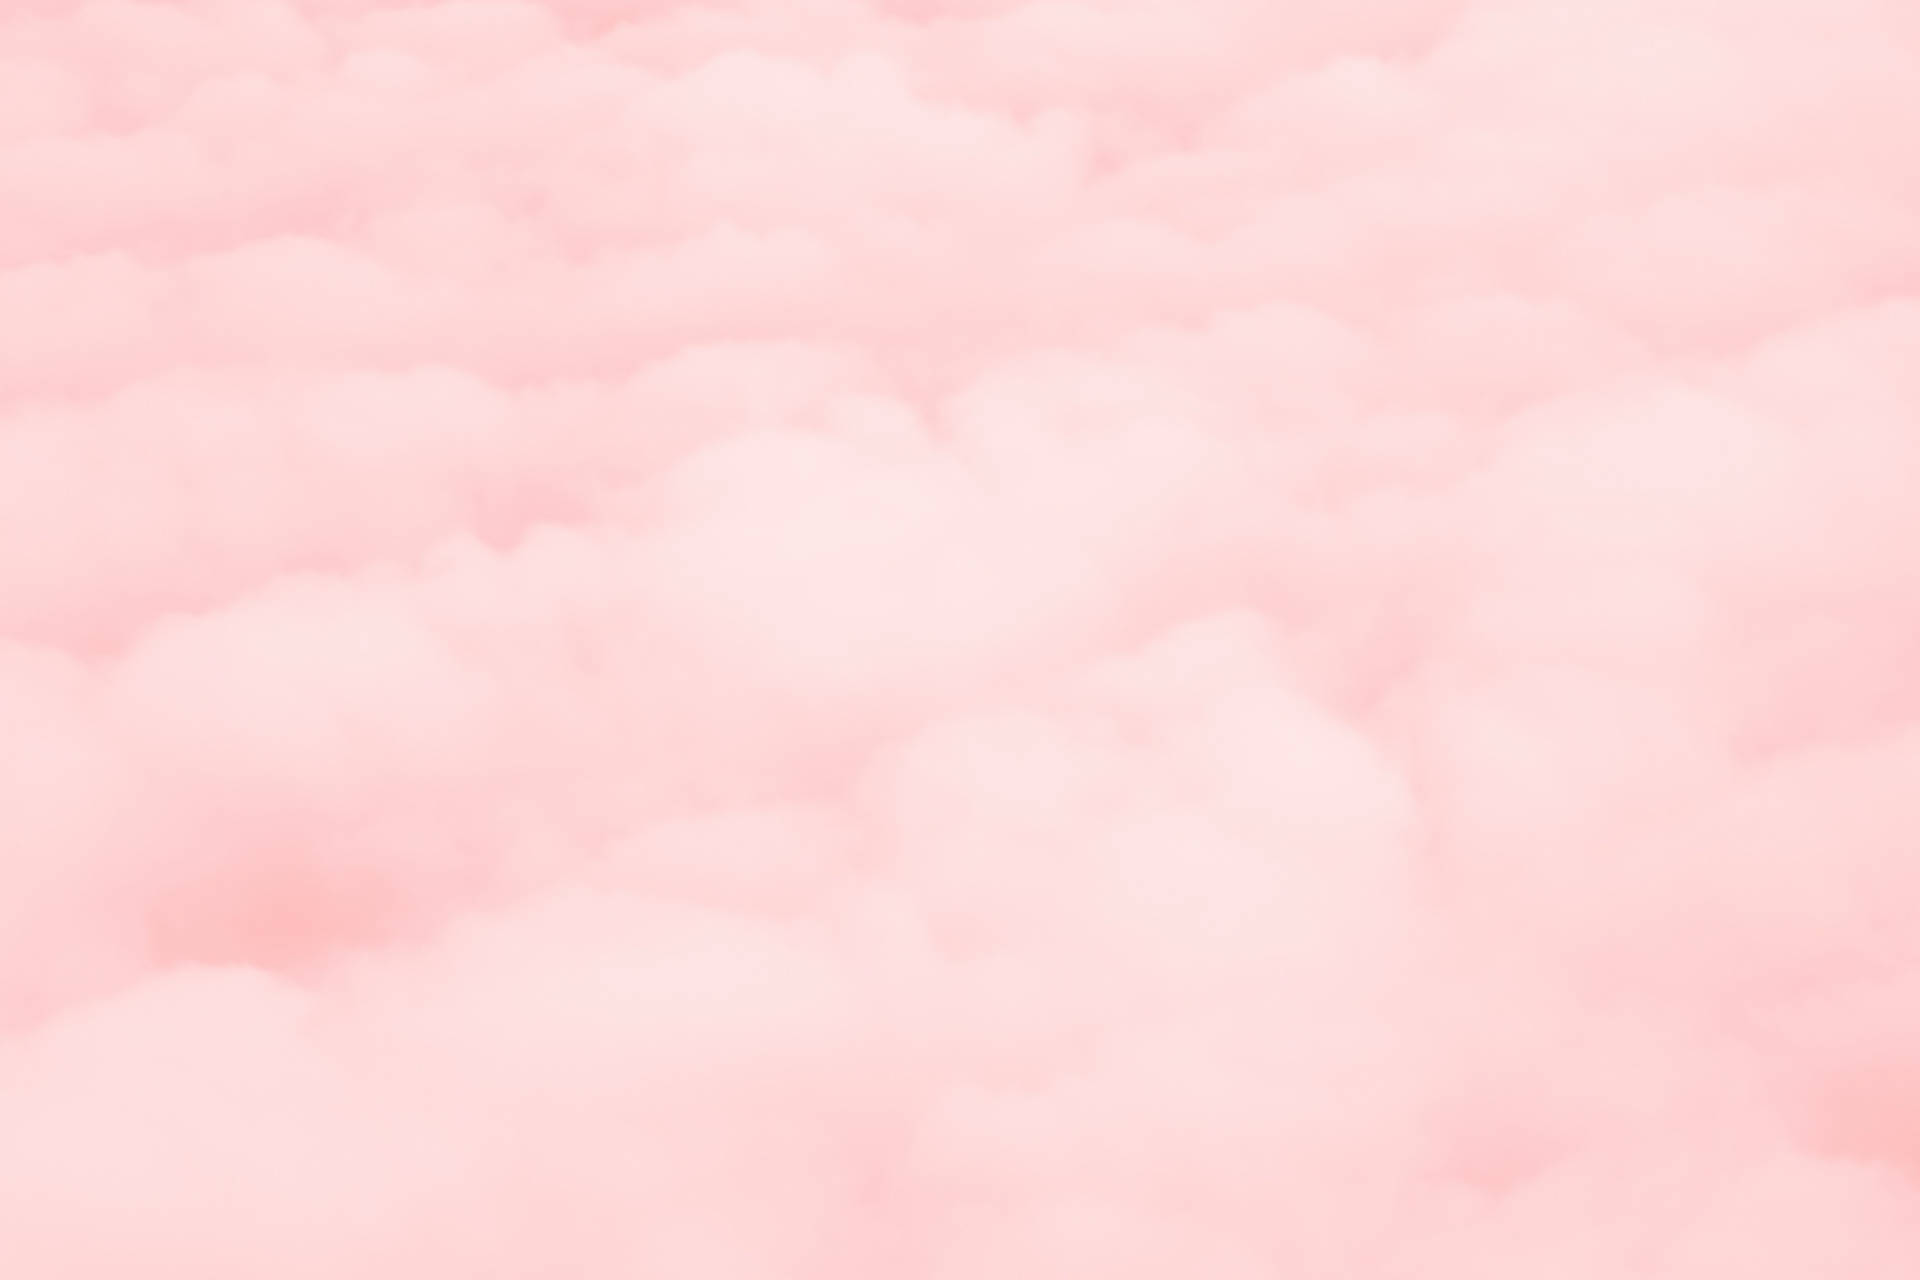 Enchanting Light Pink Cloud Aesthetic Wallpaper